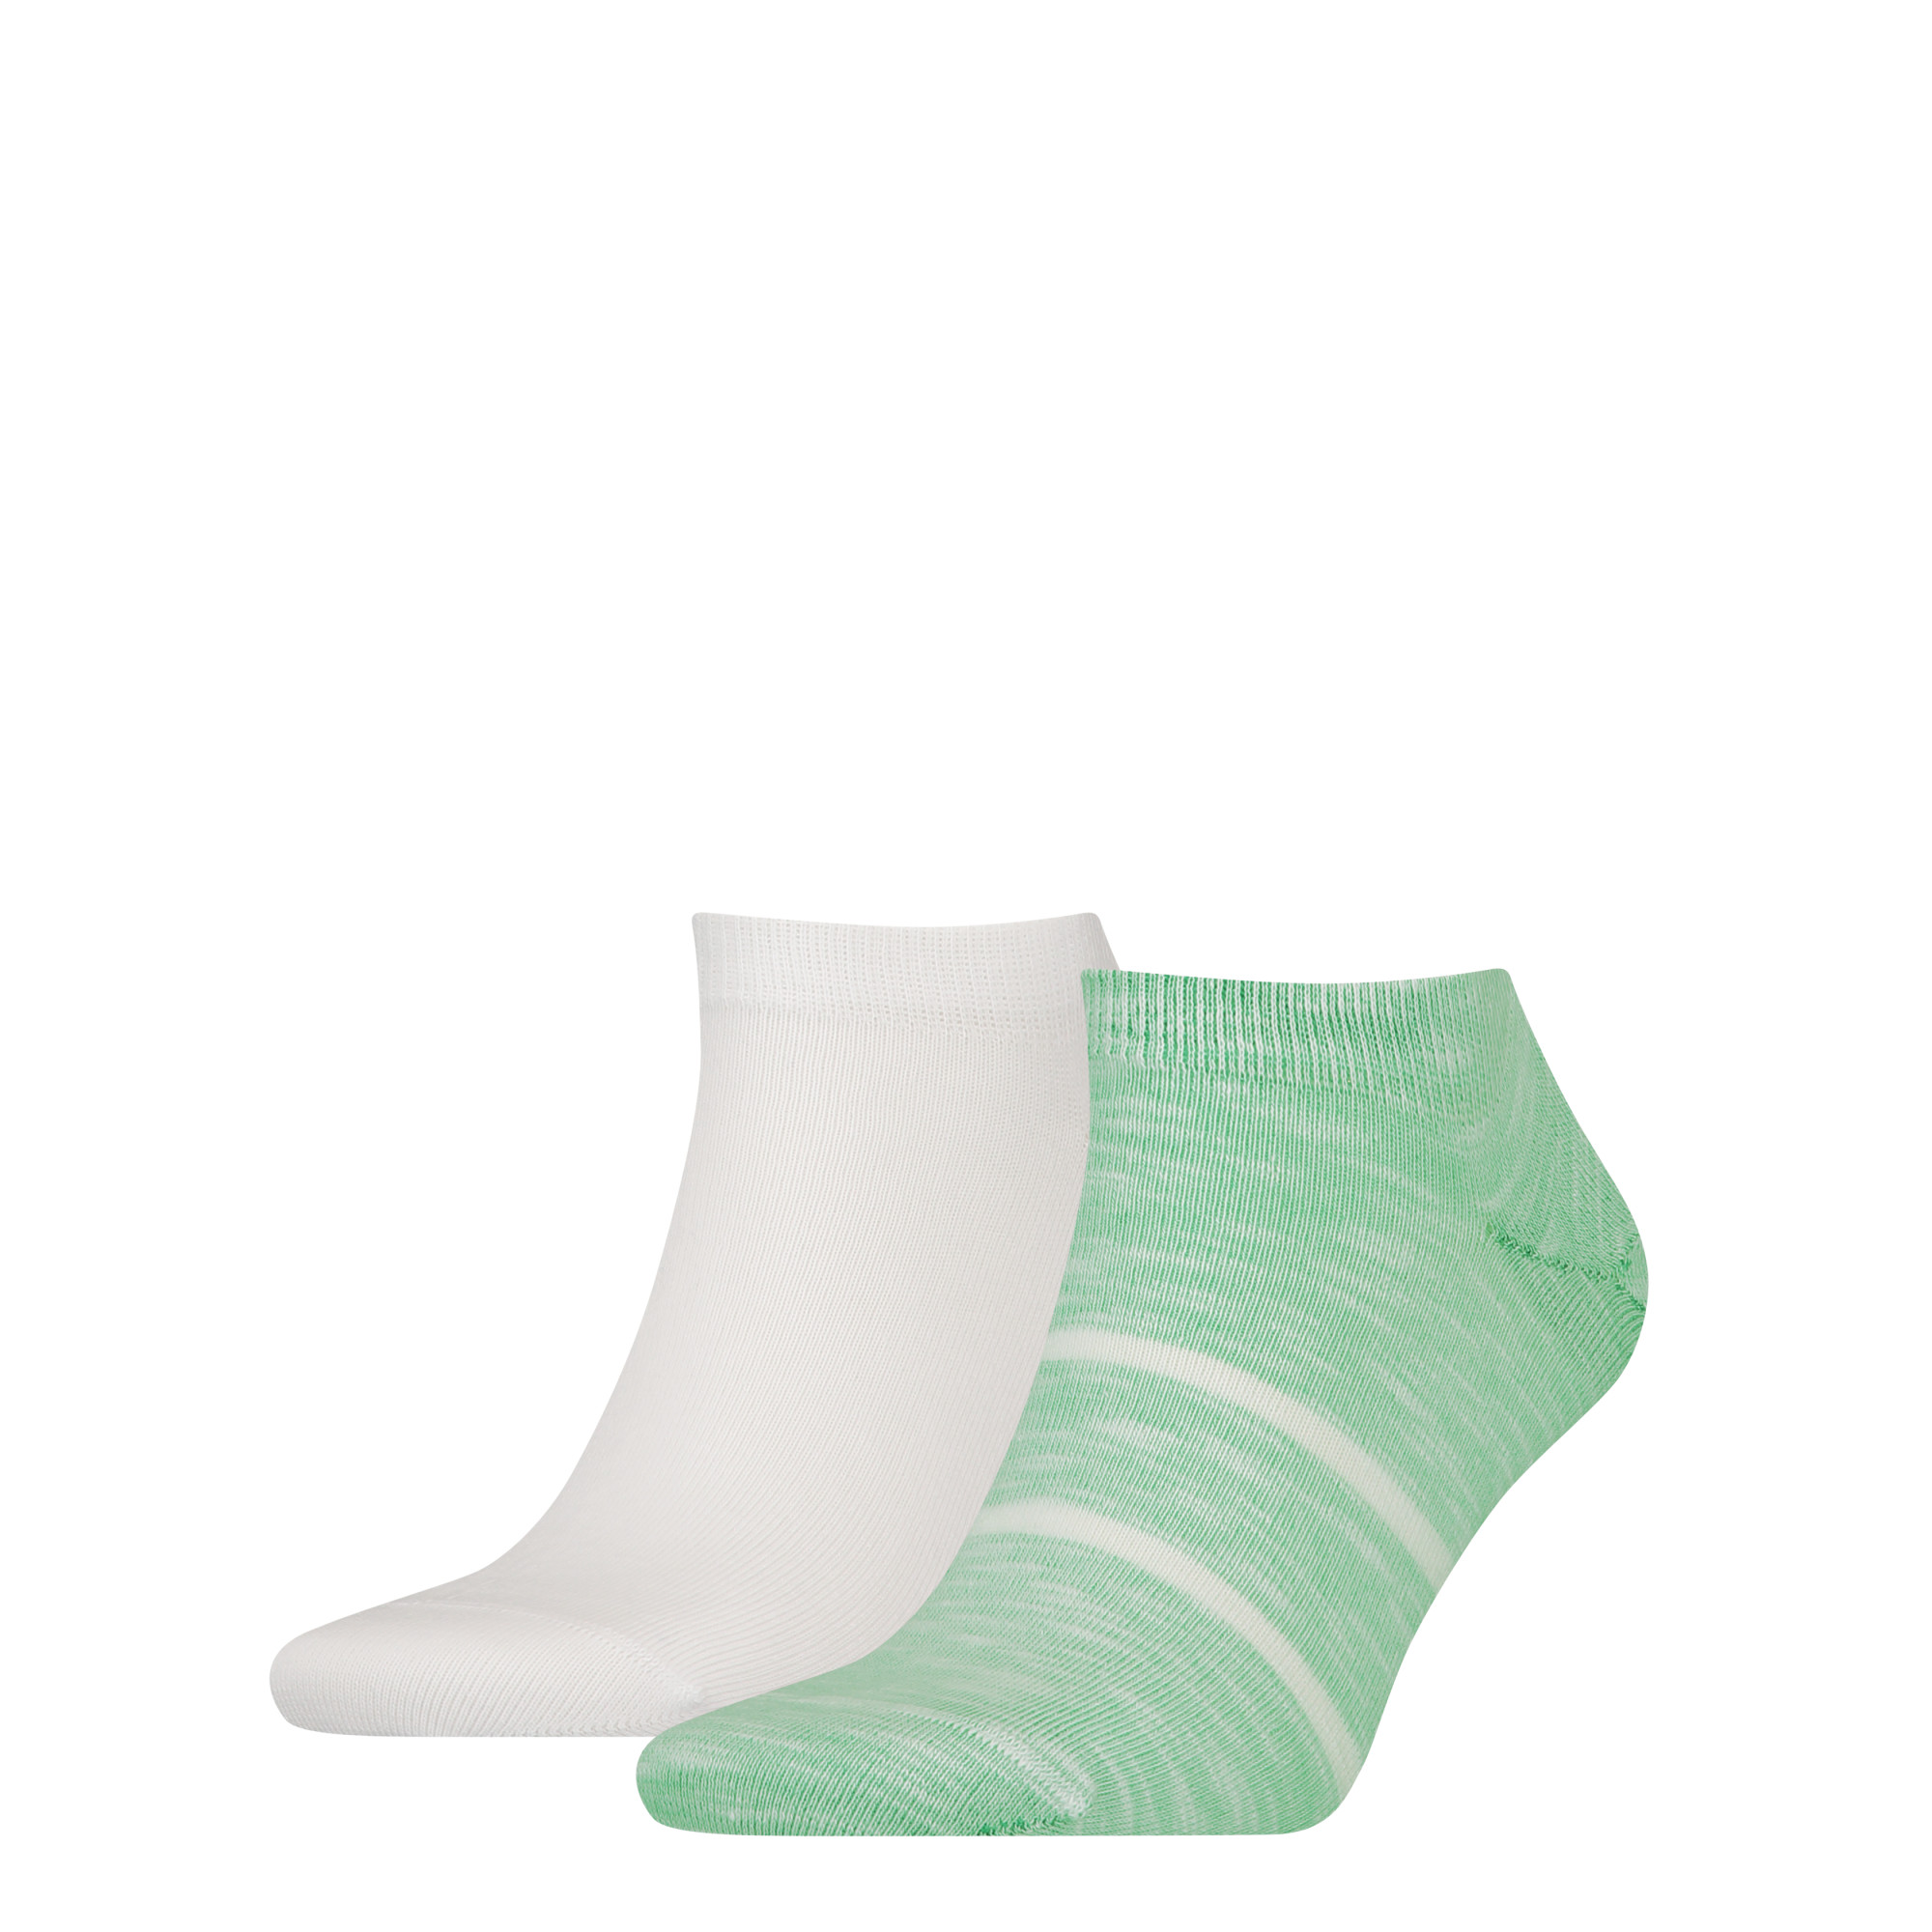 Ponožky Tommy Hilfiger 2Pack 701222638003 White/Green 43-46